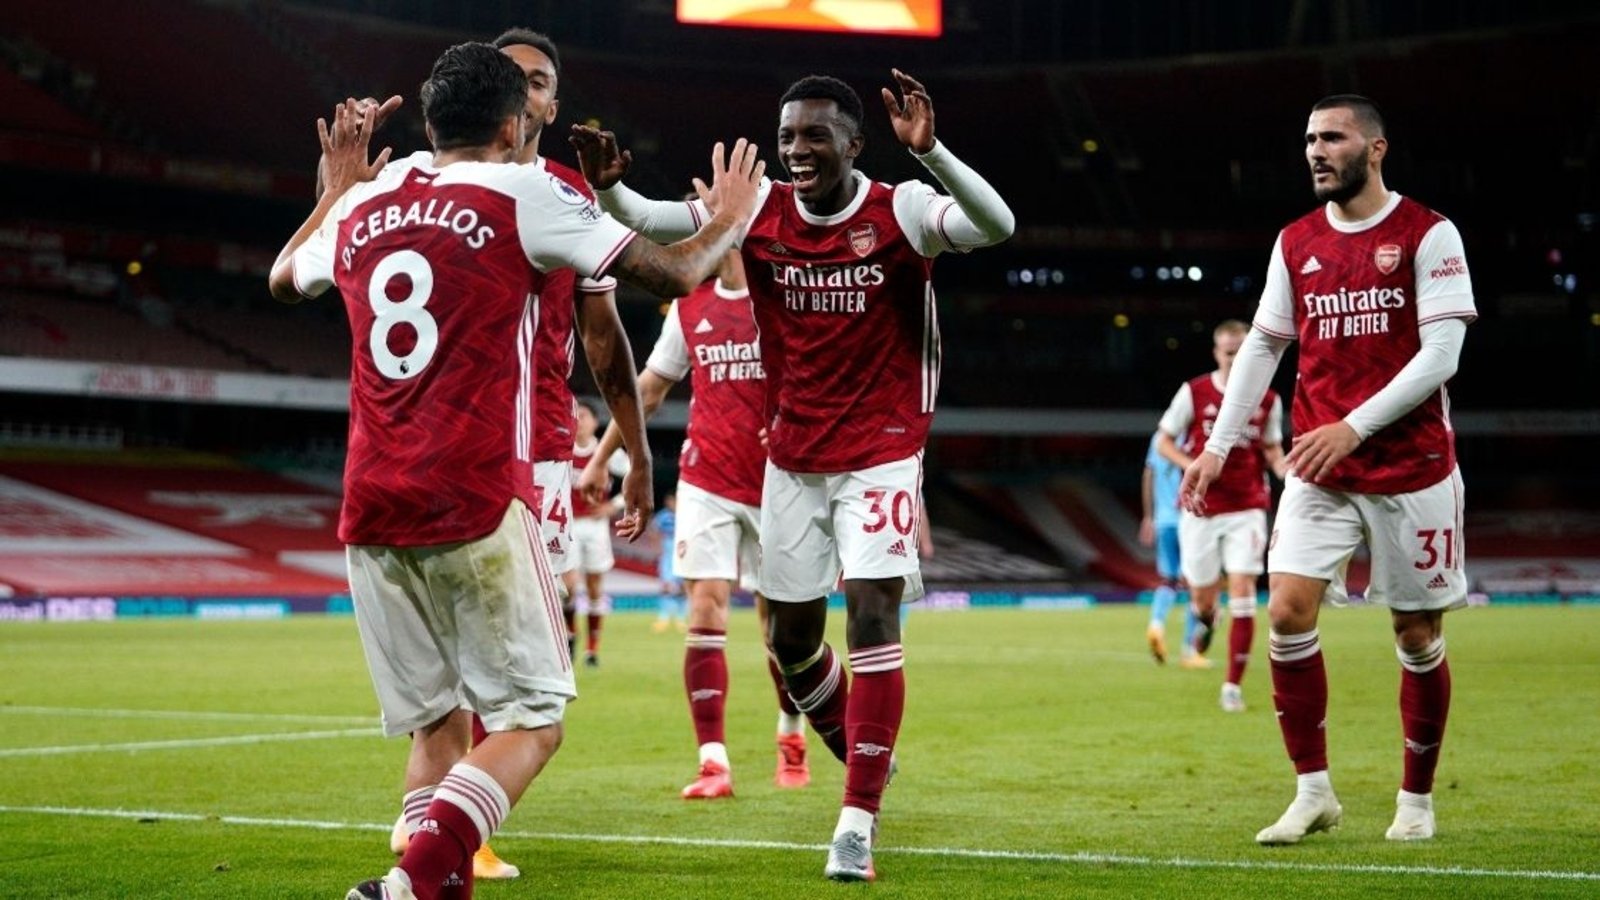 Arsenal 2 - 1 West Ham United - Match Report | Arsenal.com